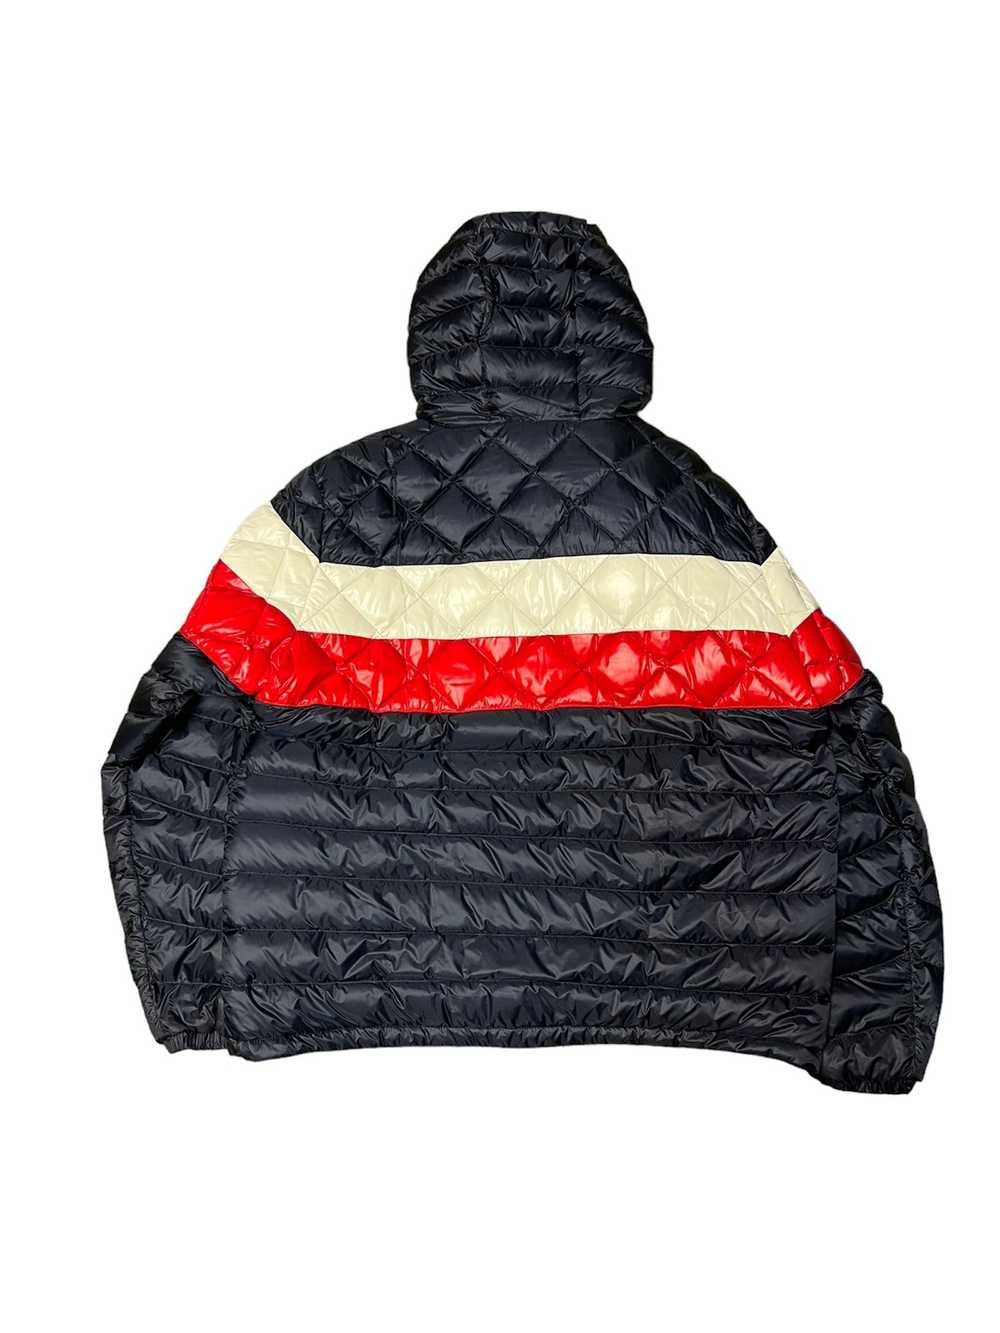 Moncler Moncler Light Puffer Jacket size 7 - image 2